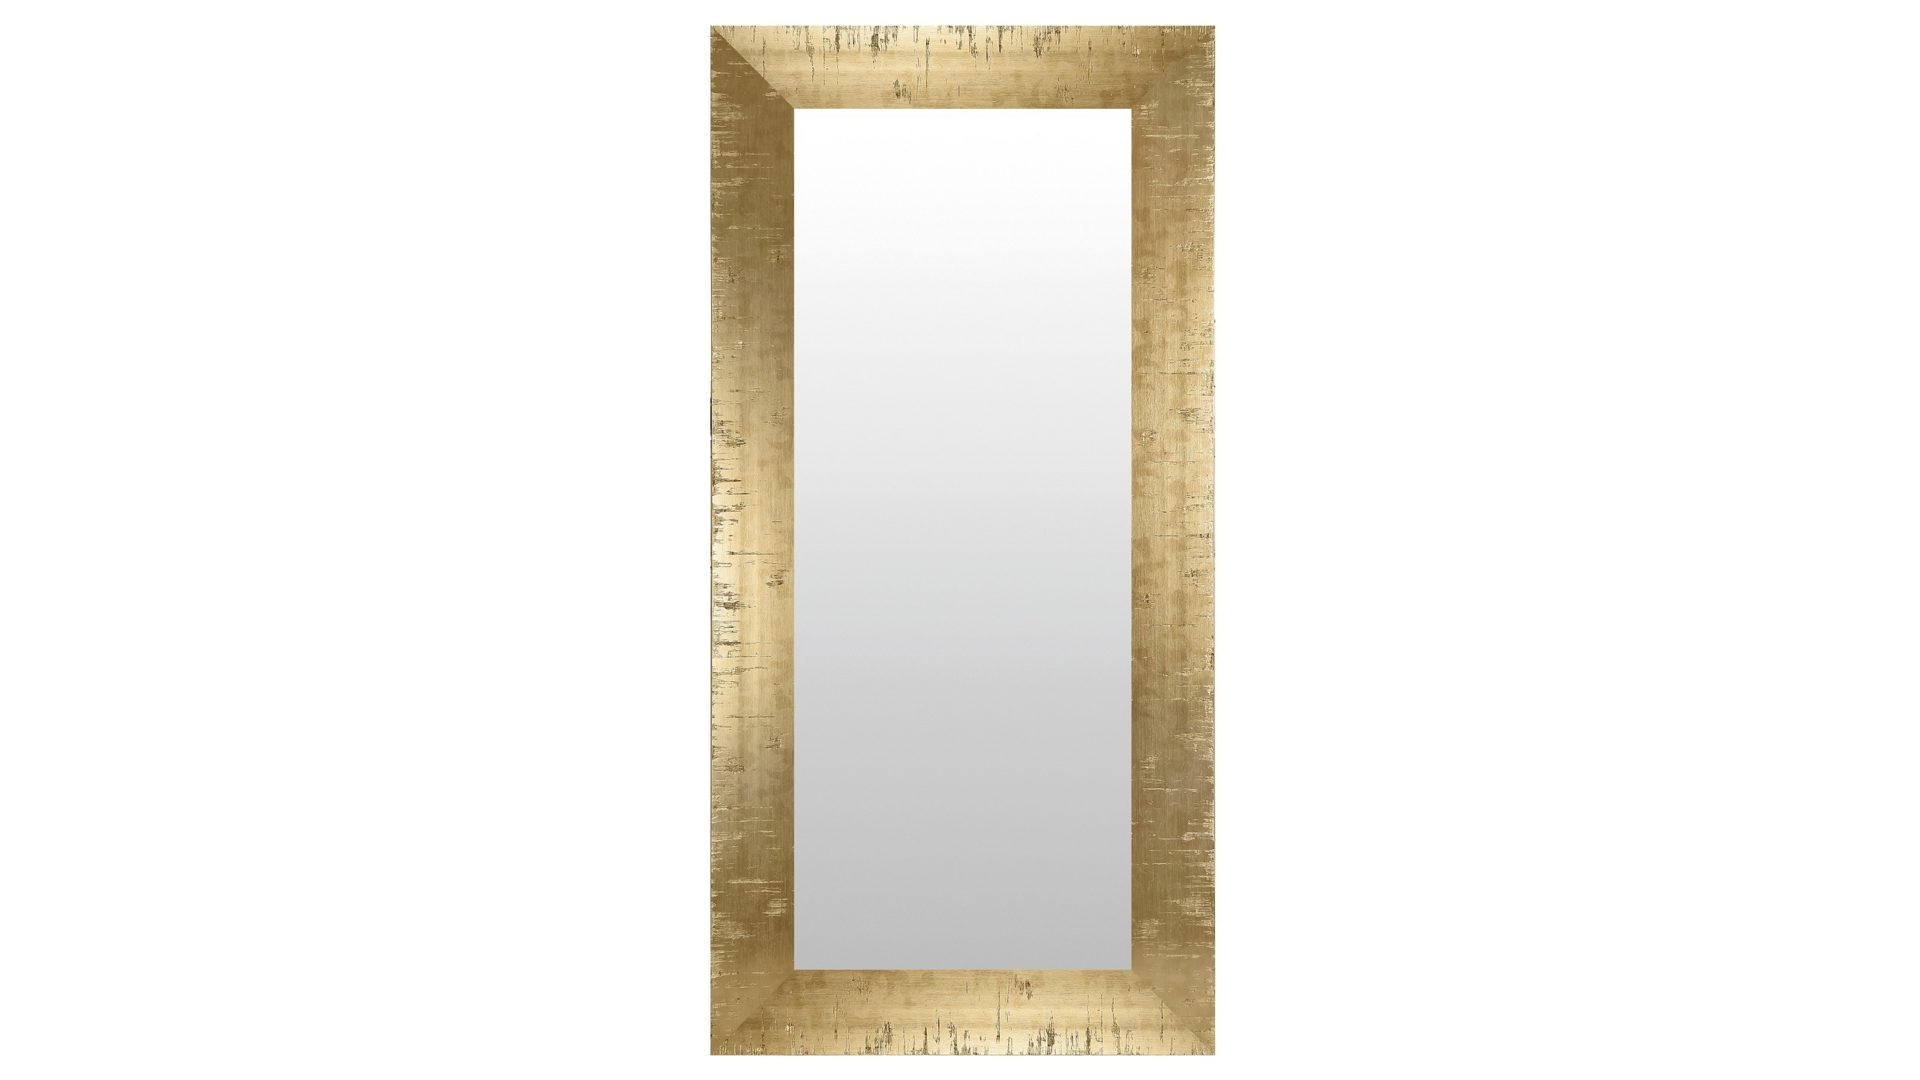 Wandspiegel Len-fra aus Spiegel Kunststoff Holz in Gold LEN-FRA Wandspiegel Garderobenspiegel JOANA ca. 87 x 187 cm, Rahmen gold